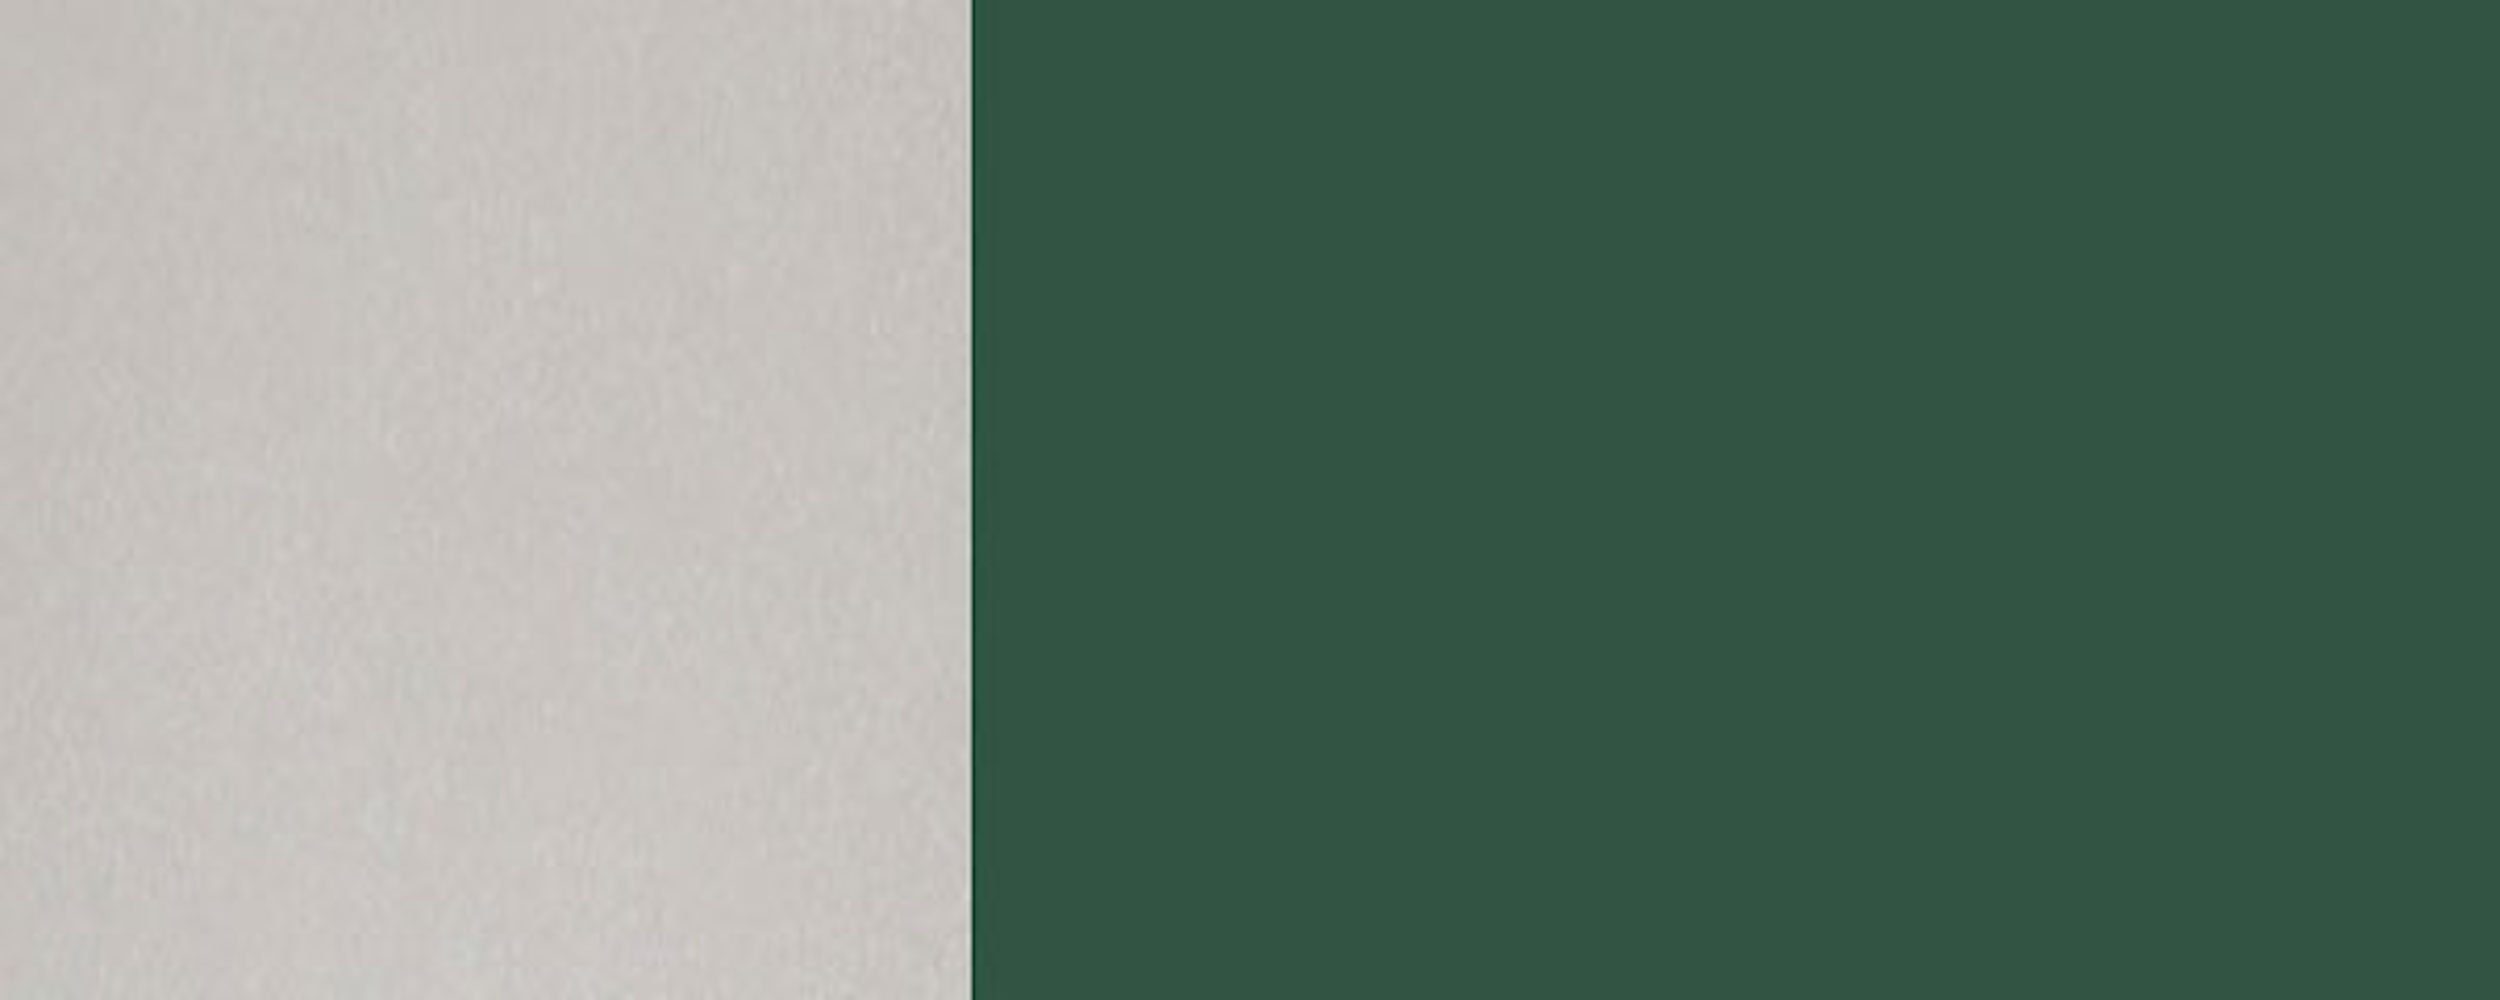 kieferngrün 45cm matt und Sockelblende Tivoli, Feldmann-Wohnen 6028 Front- RAL vollintegriert Sockelfarbe wählbar